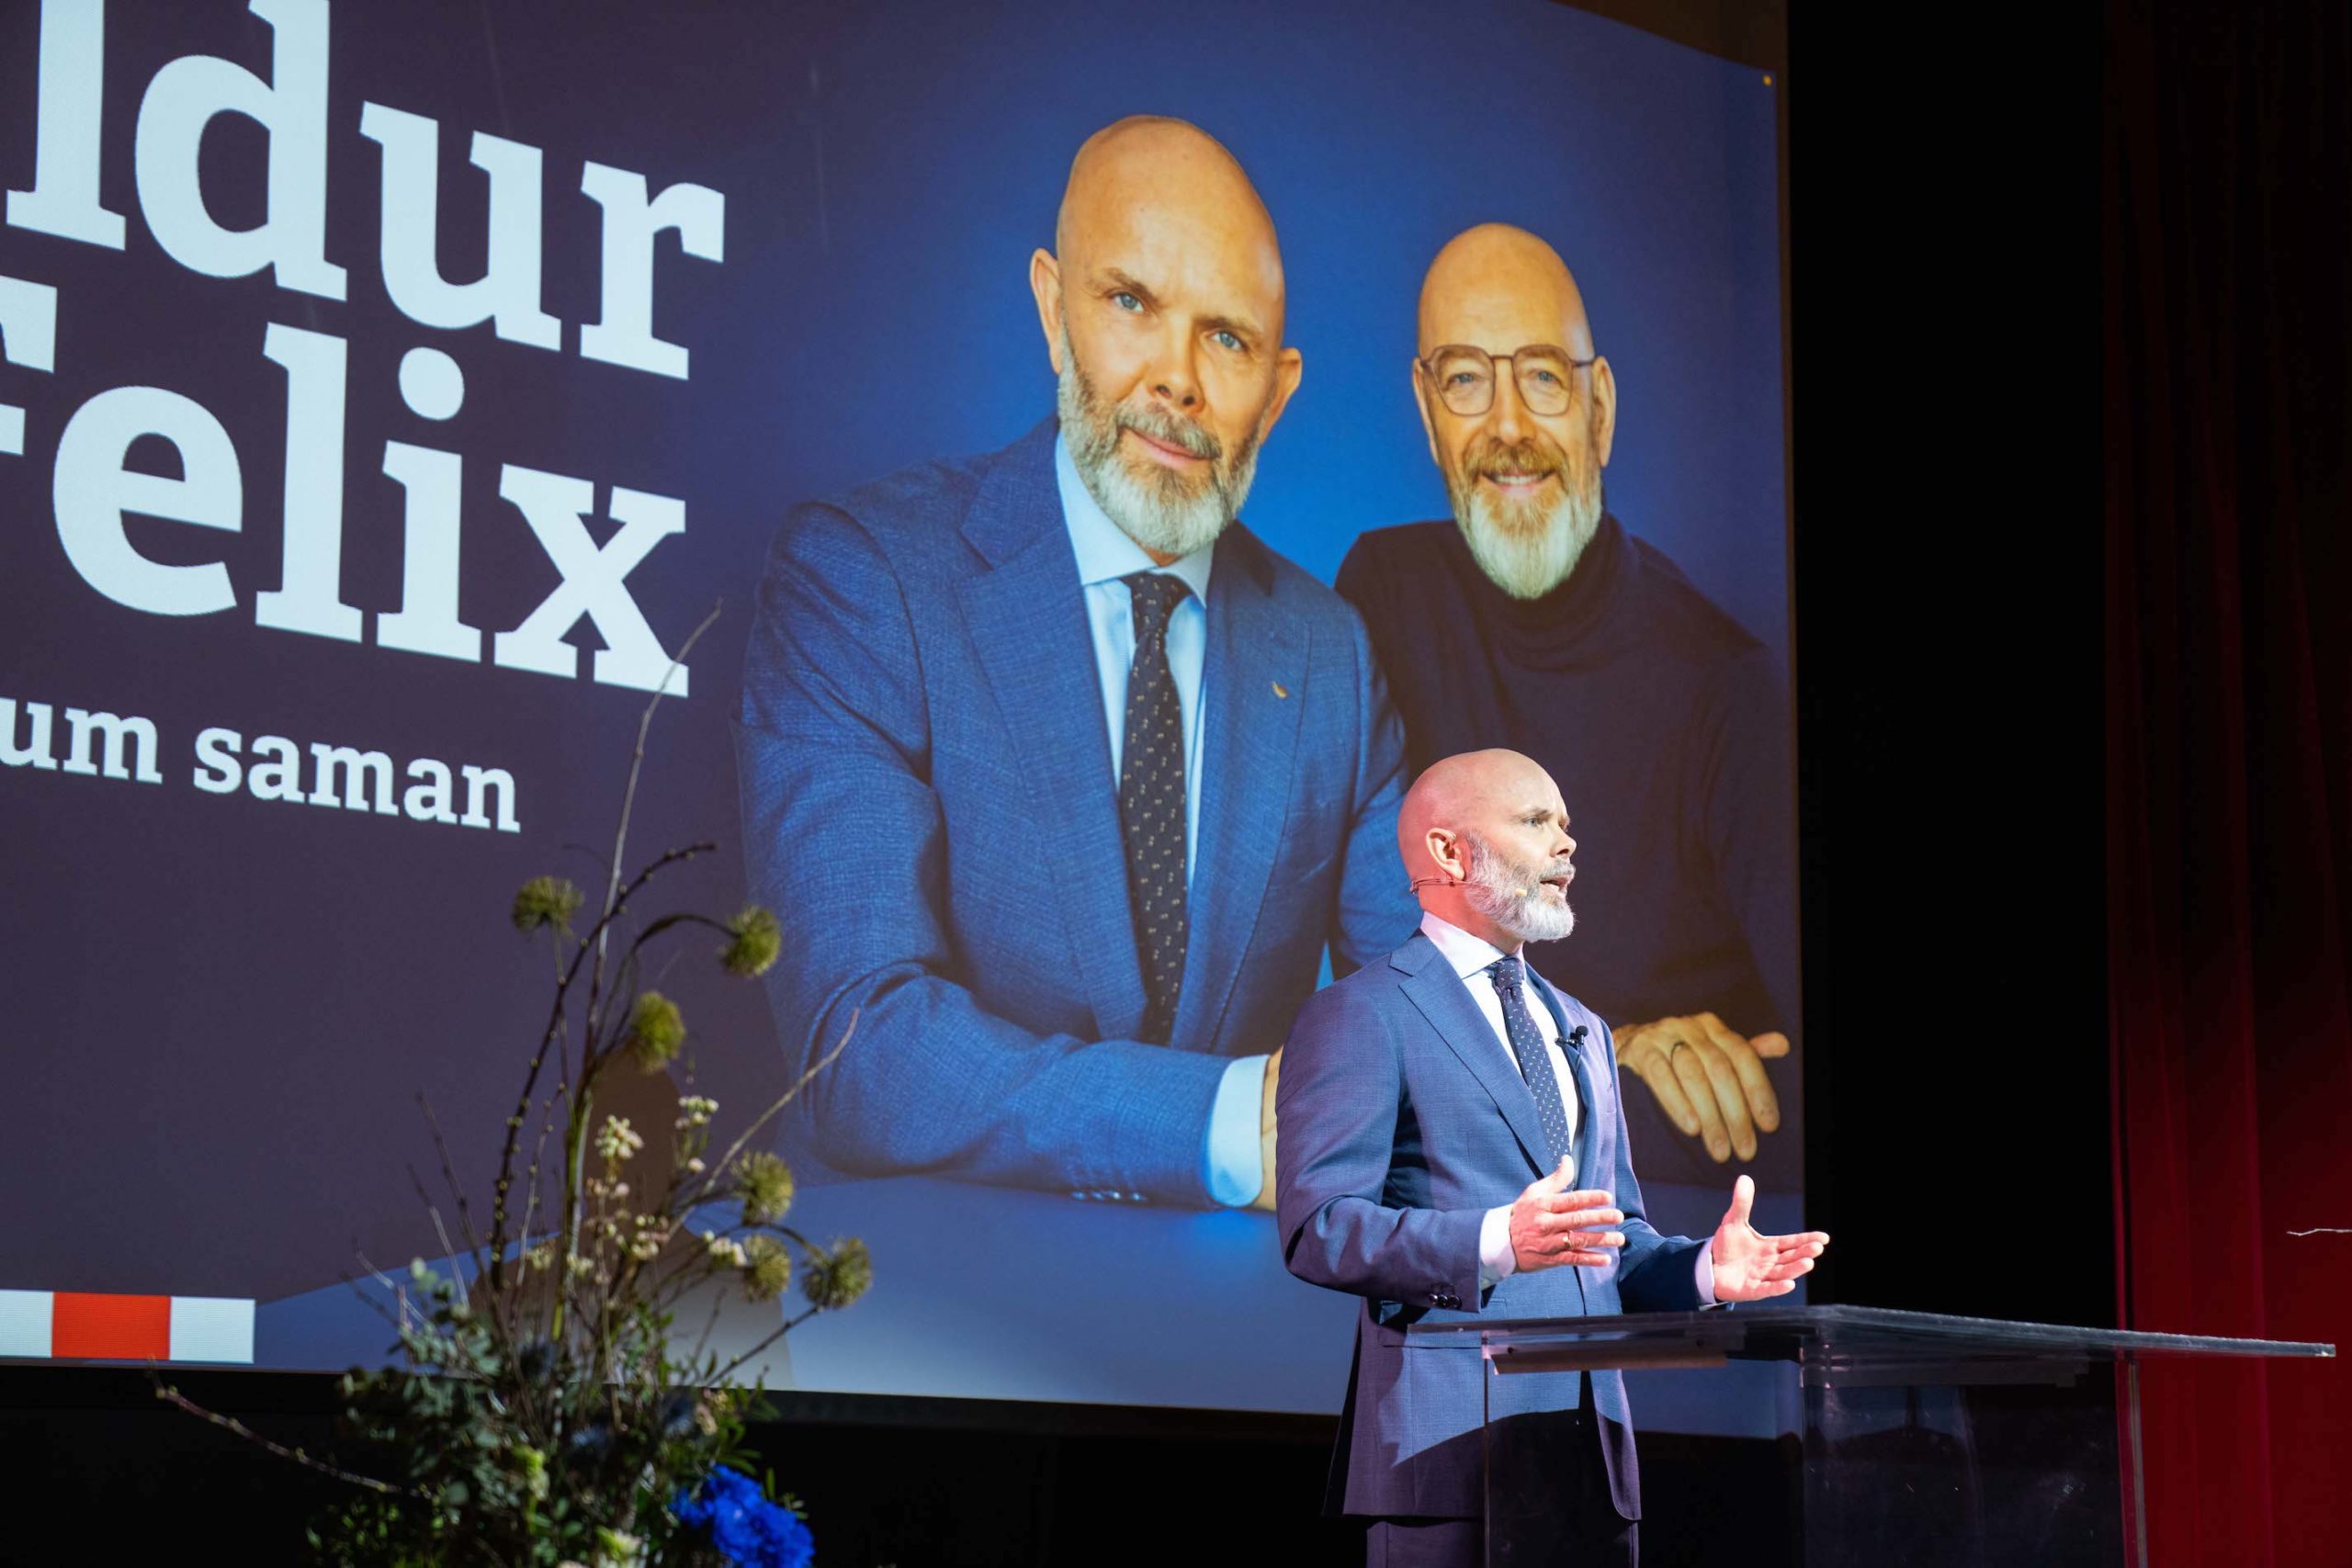 Baldur Thorhallsson For President of Iceland 2024 On Stage